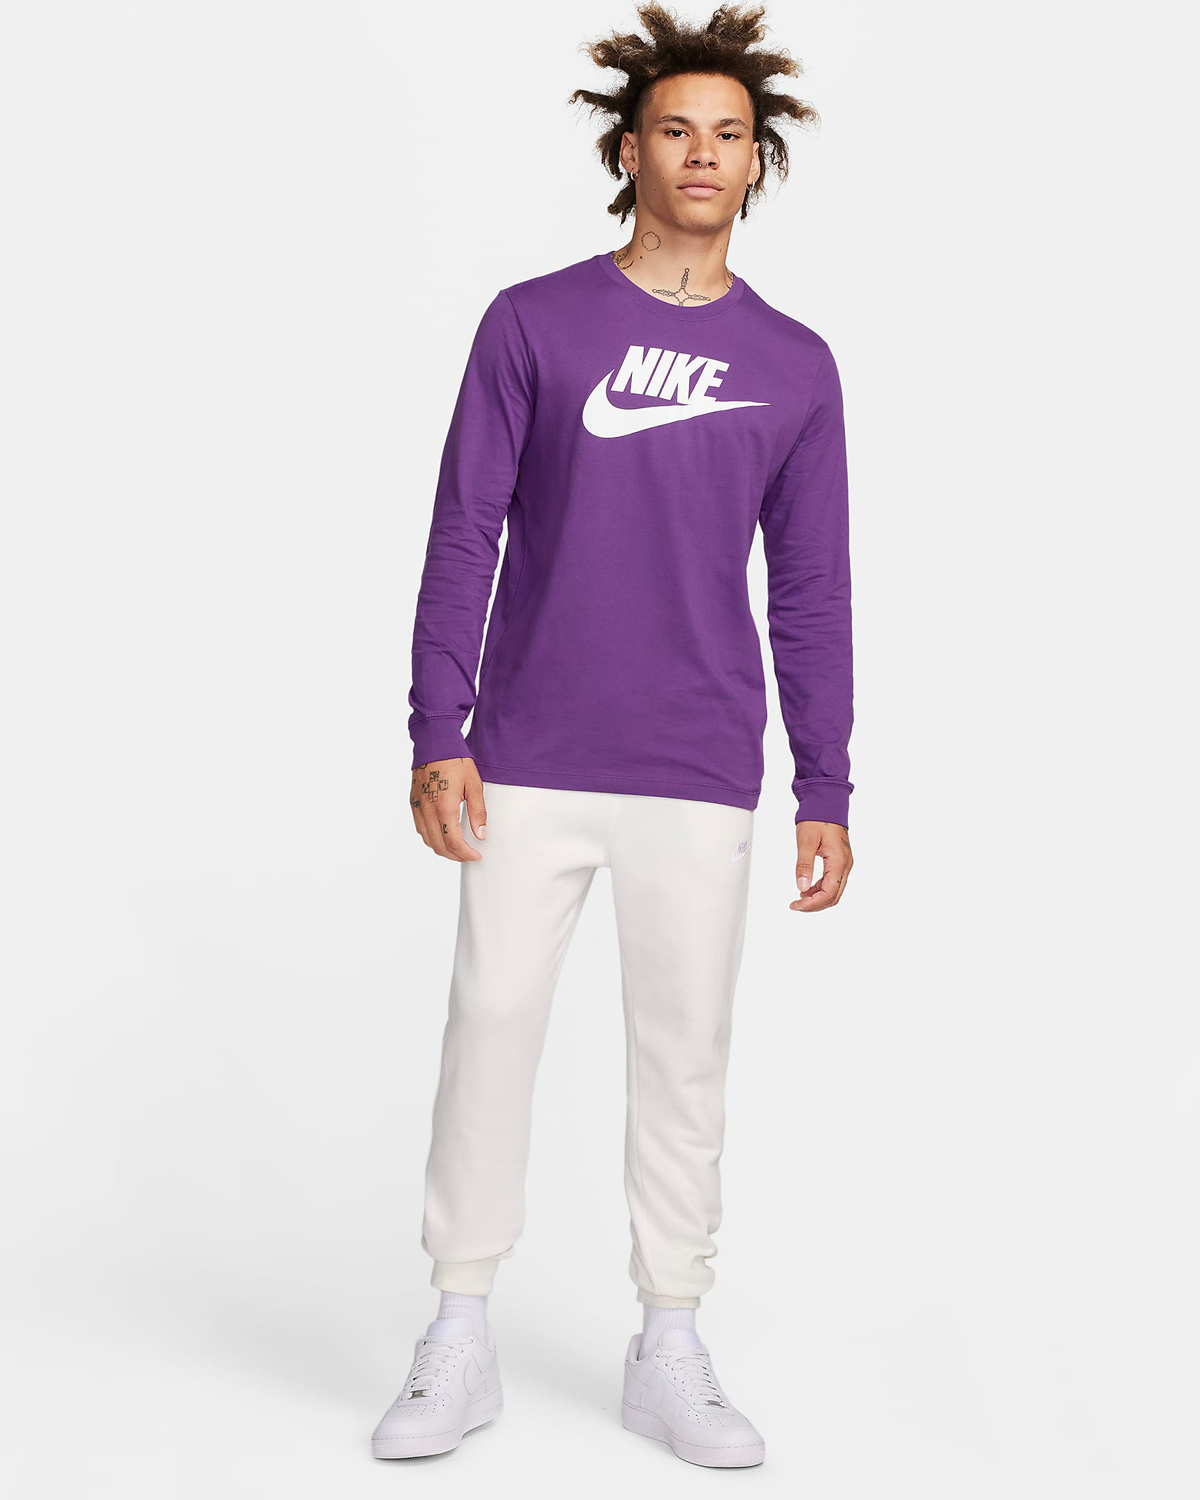 Nike-Sportswear-Long-Sleeve-T-Shirt-Purple-Cosmos-Outfit